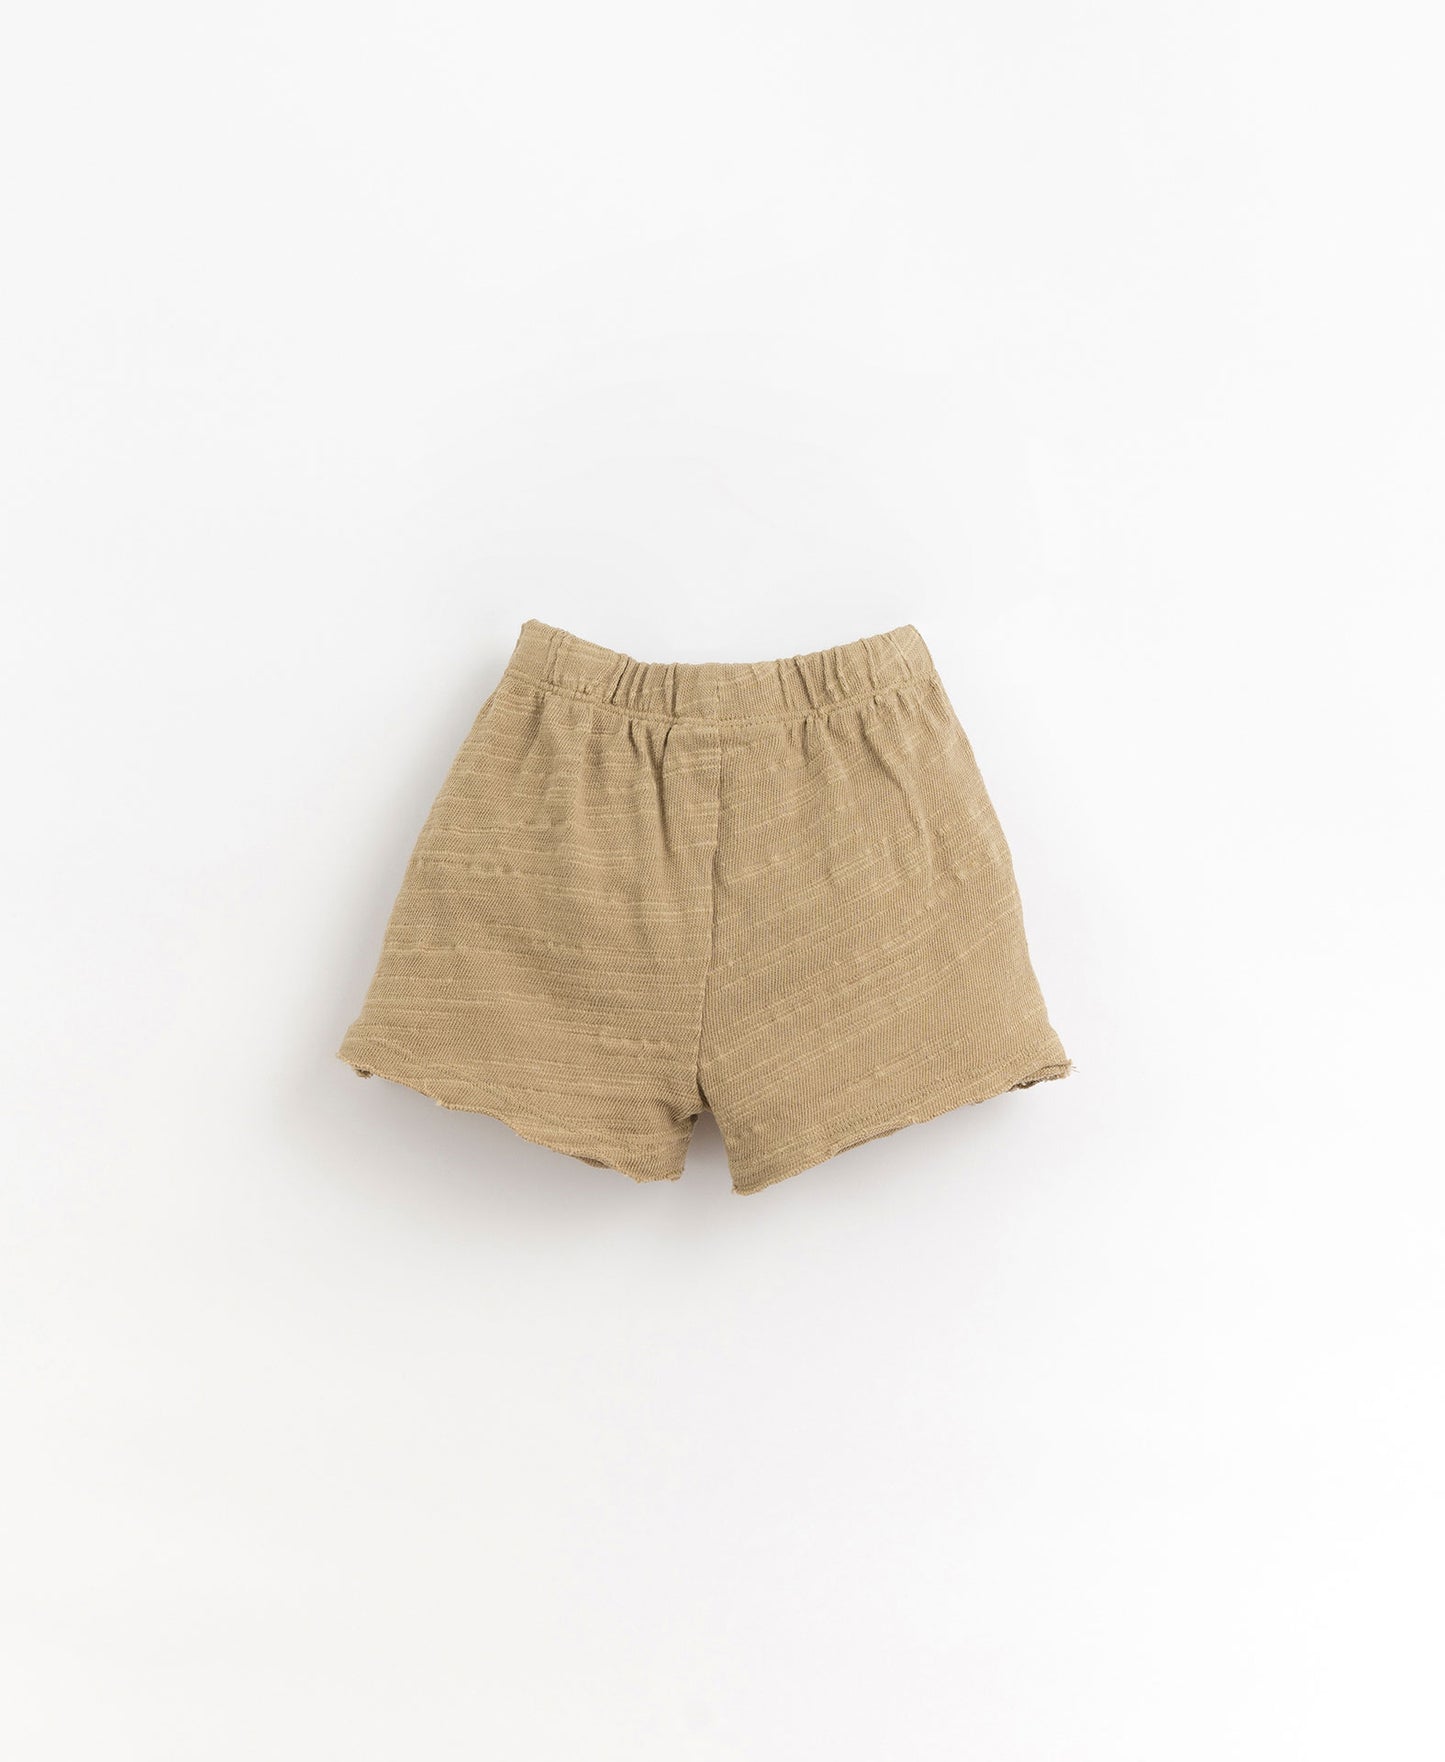 Shorts with kangaroo pocket - tan